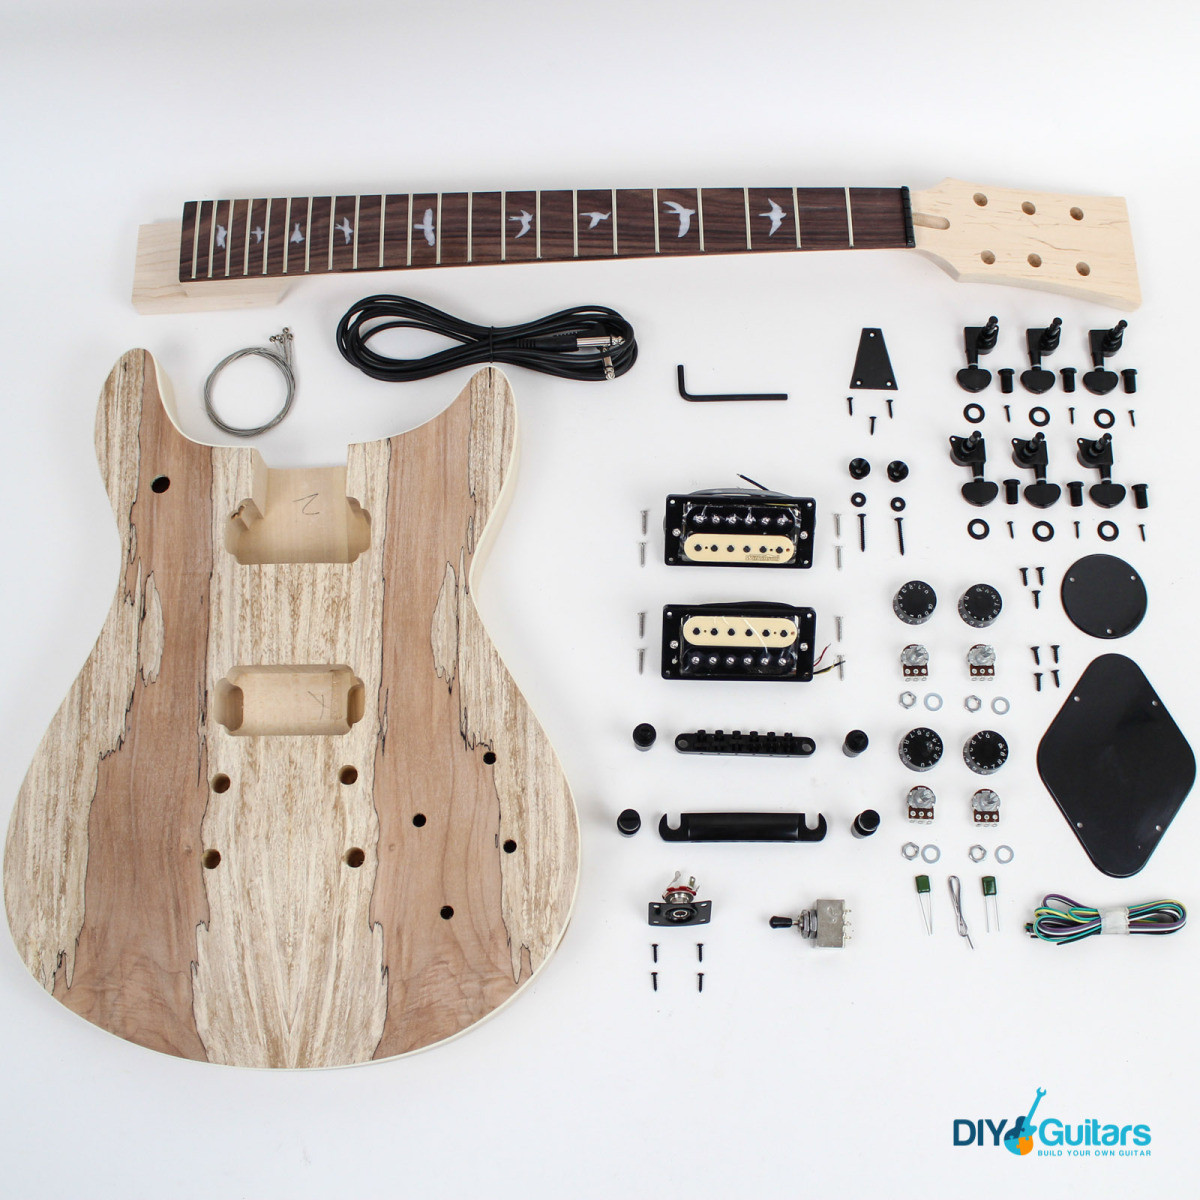 Best ideas about DIY Guitars Kits
. Save or Pin USA Special Guitar Kit DIY Guitars Now.